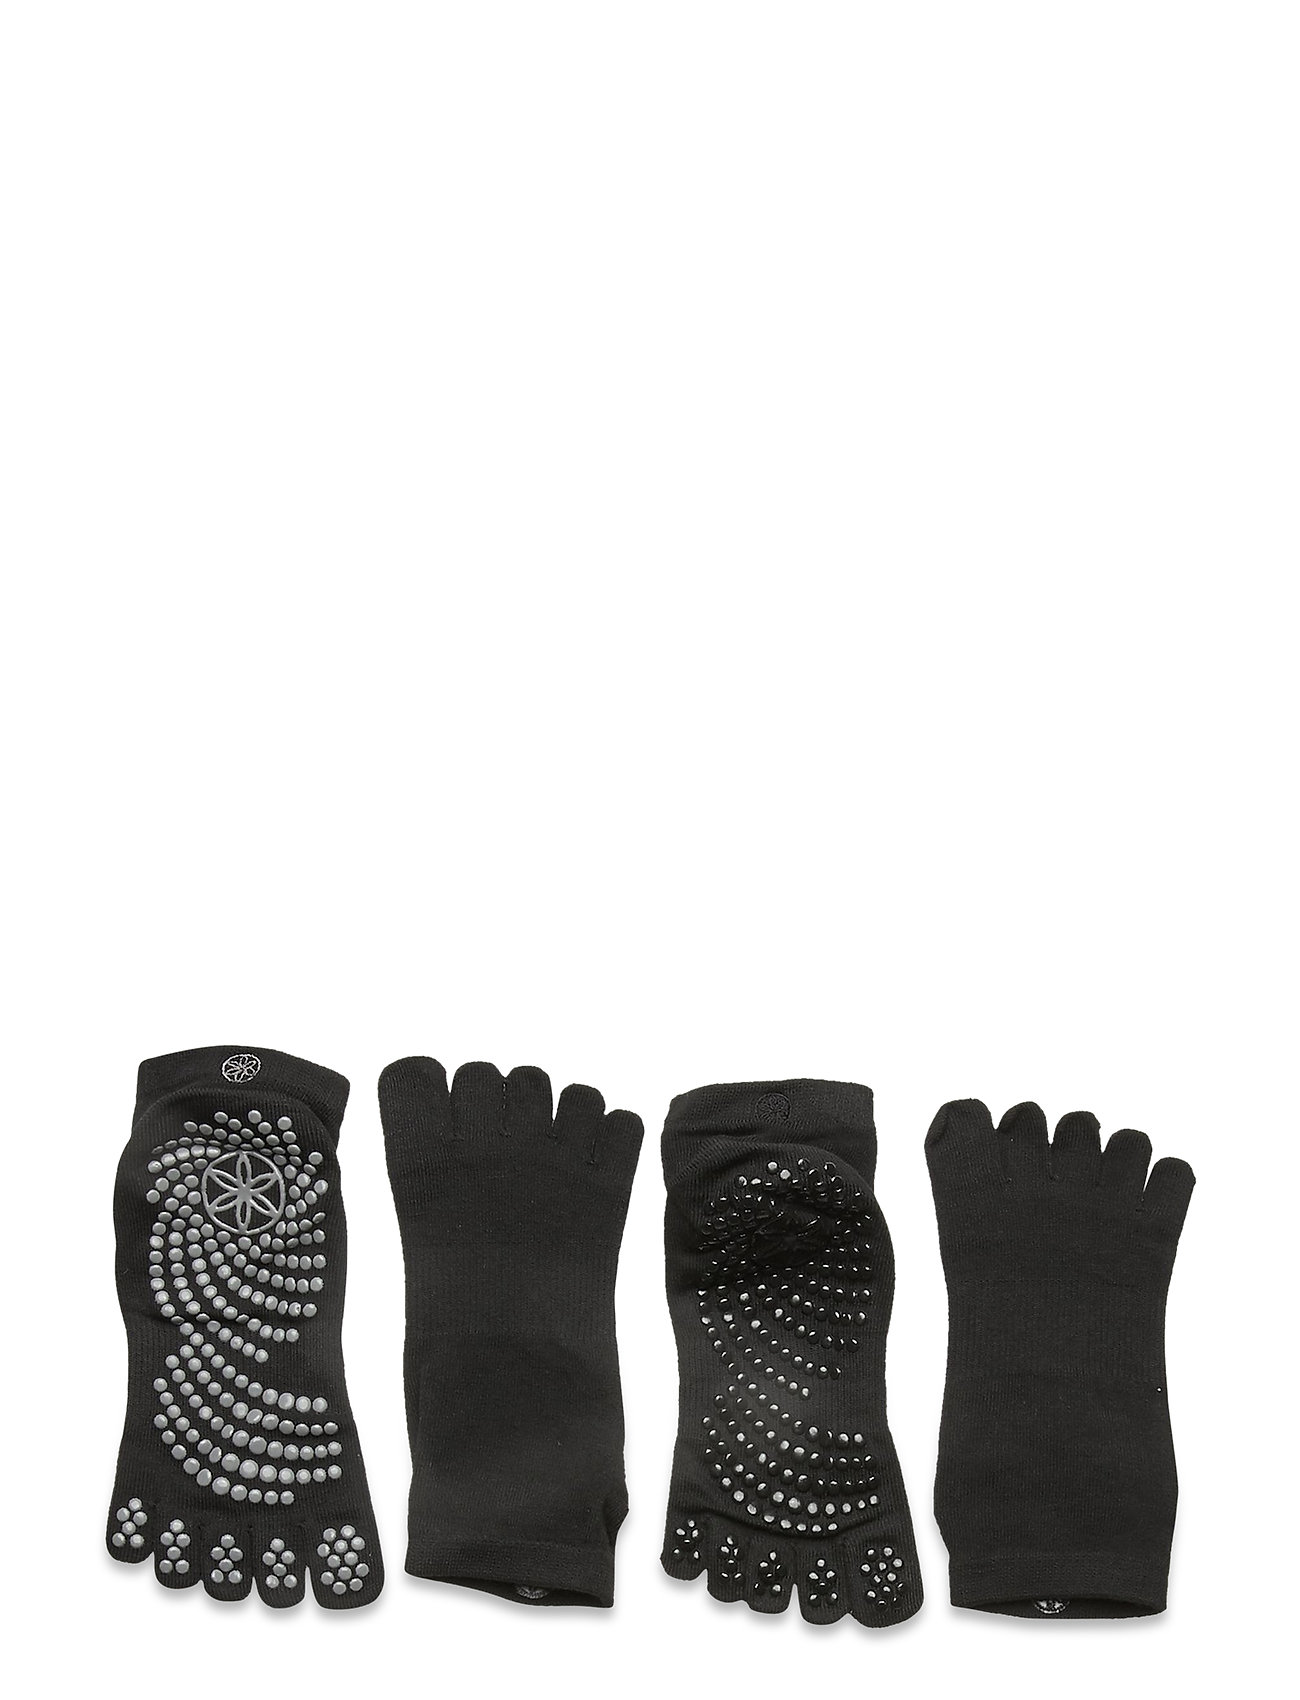 Grippy Yoga Socks Black/Grey 2-Pack Accessories Sports Equipment Yoga Equipment Yoga Socks Musta Gaiam